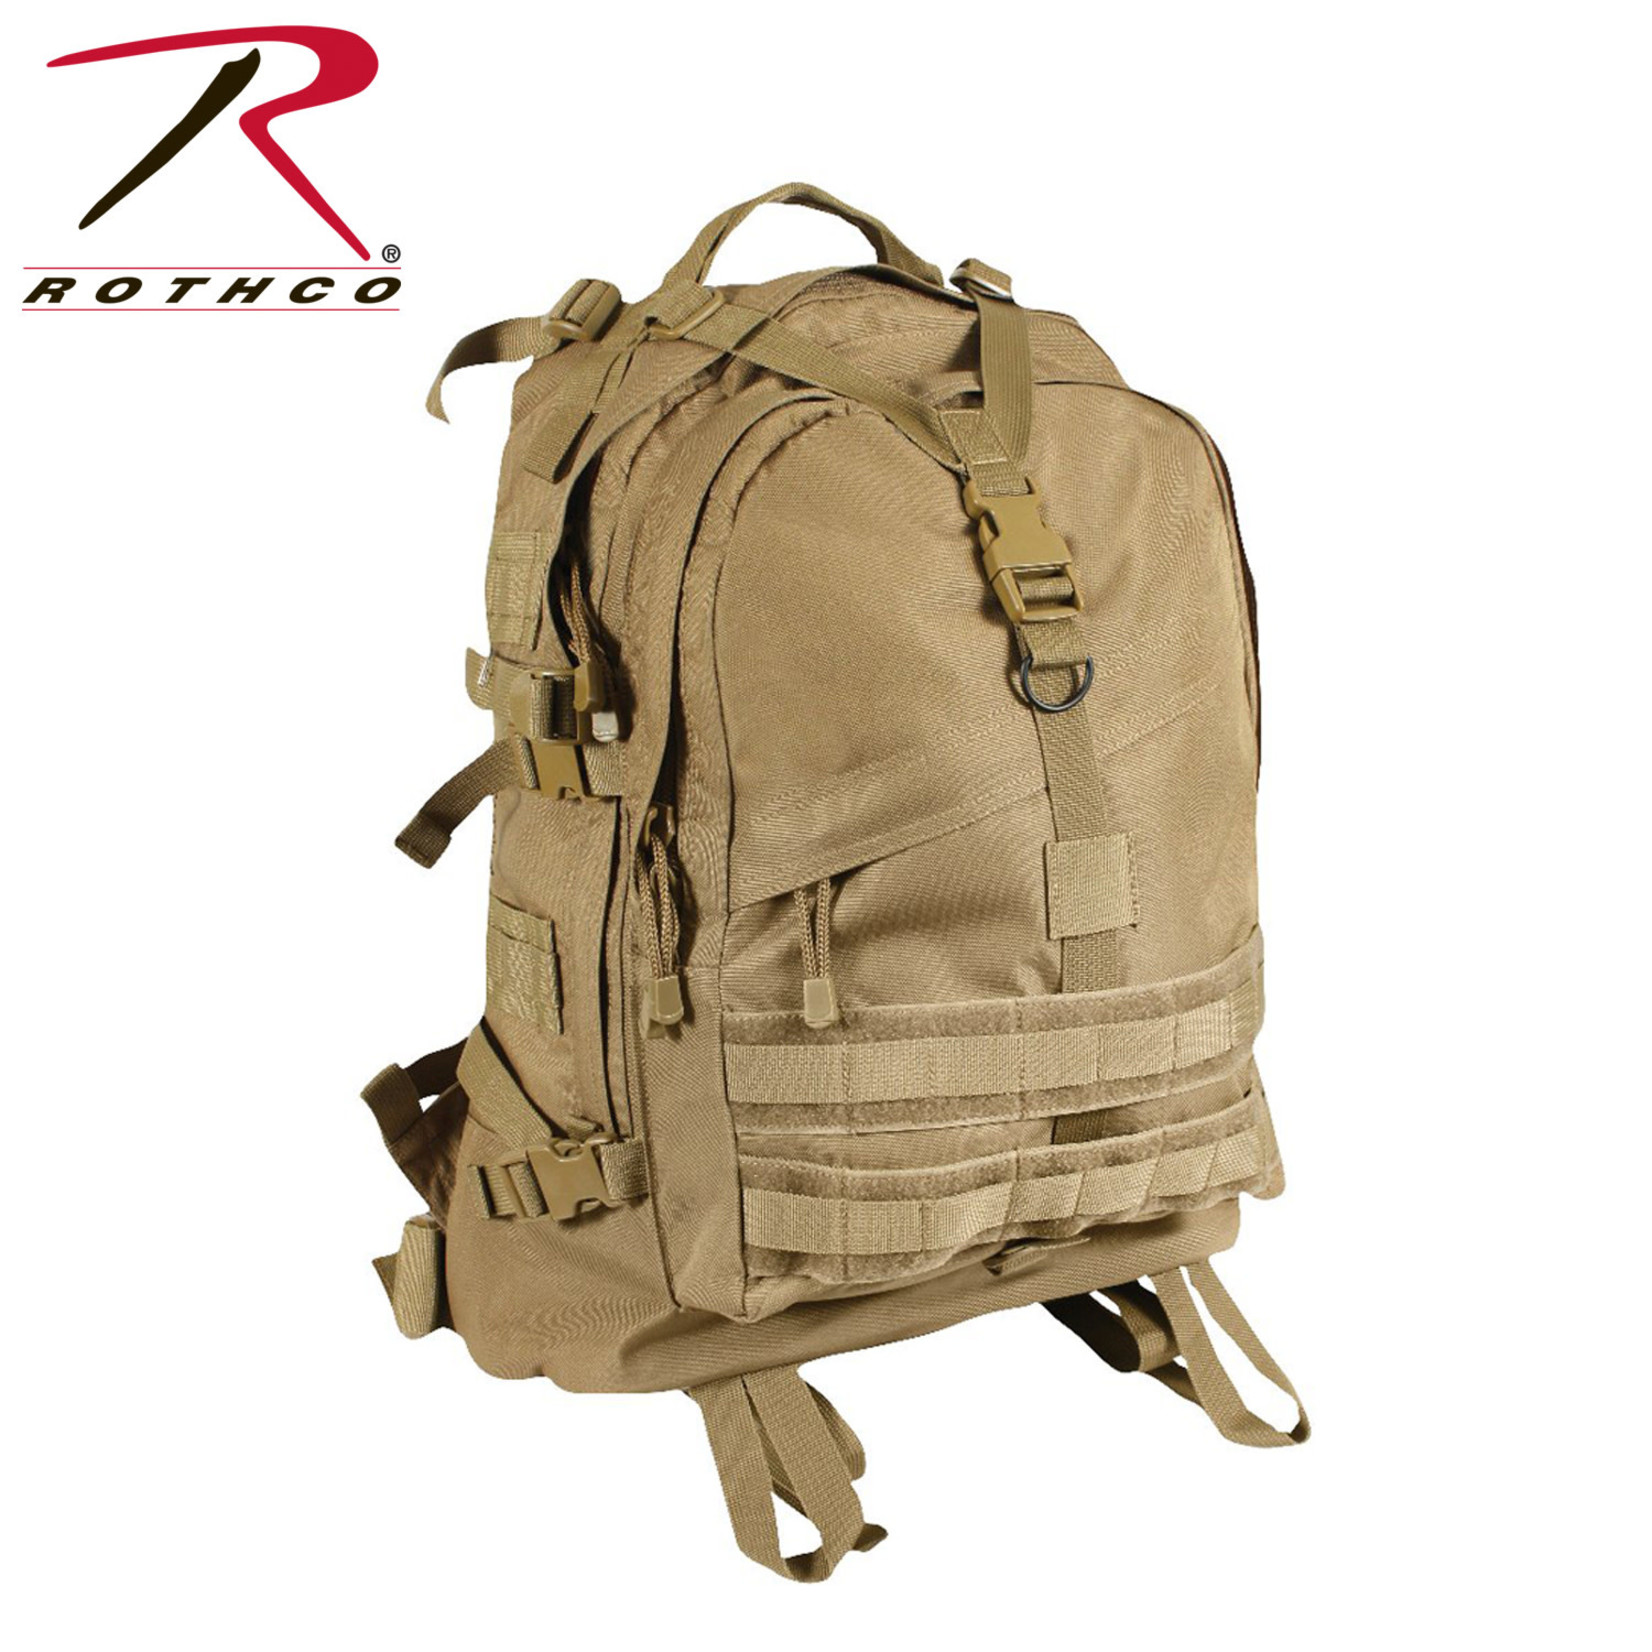 Rothco Rothco Large Transport Backpack